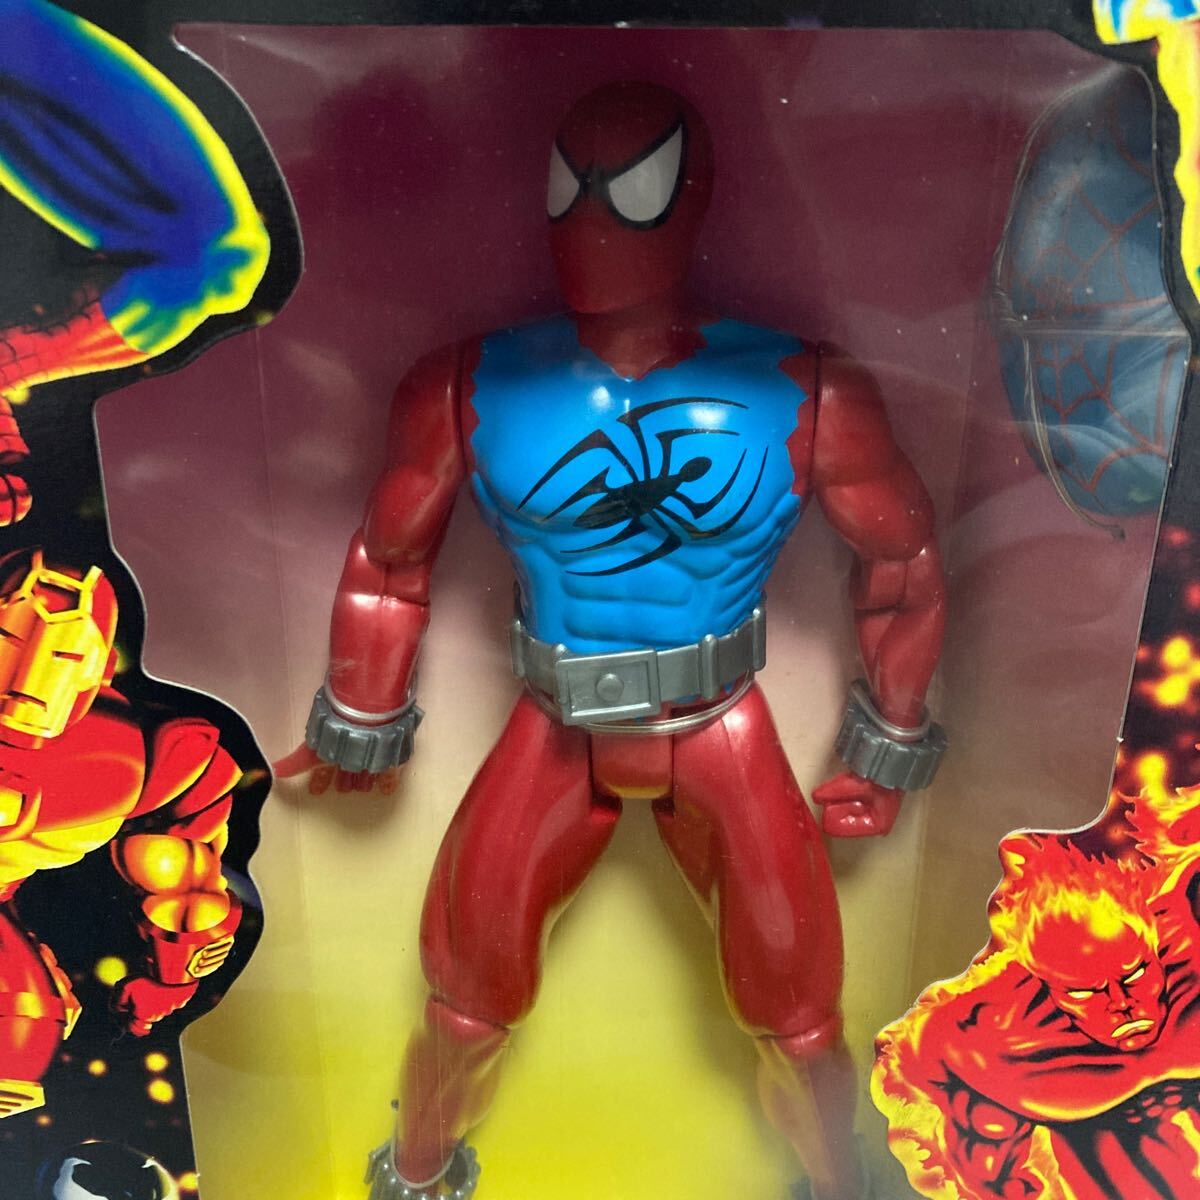 iooo[ нераспечатанный ]TOYBIZ игрушка bizma- bell Universe 10 дюймовый action фигурка SPIDER-MAN Человек-паук алый Spider 